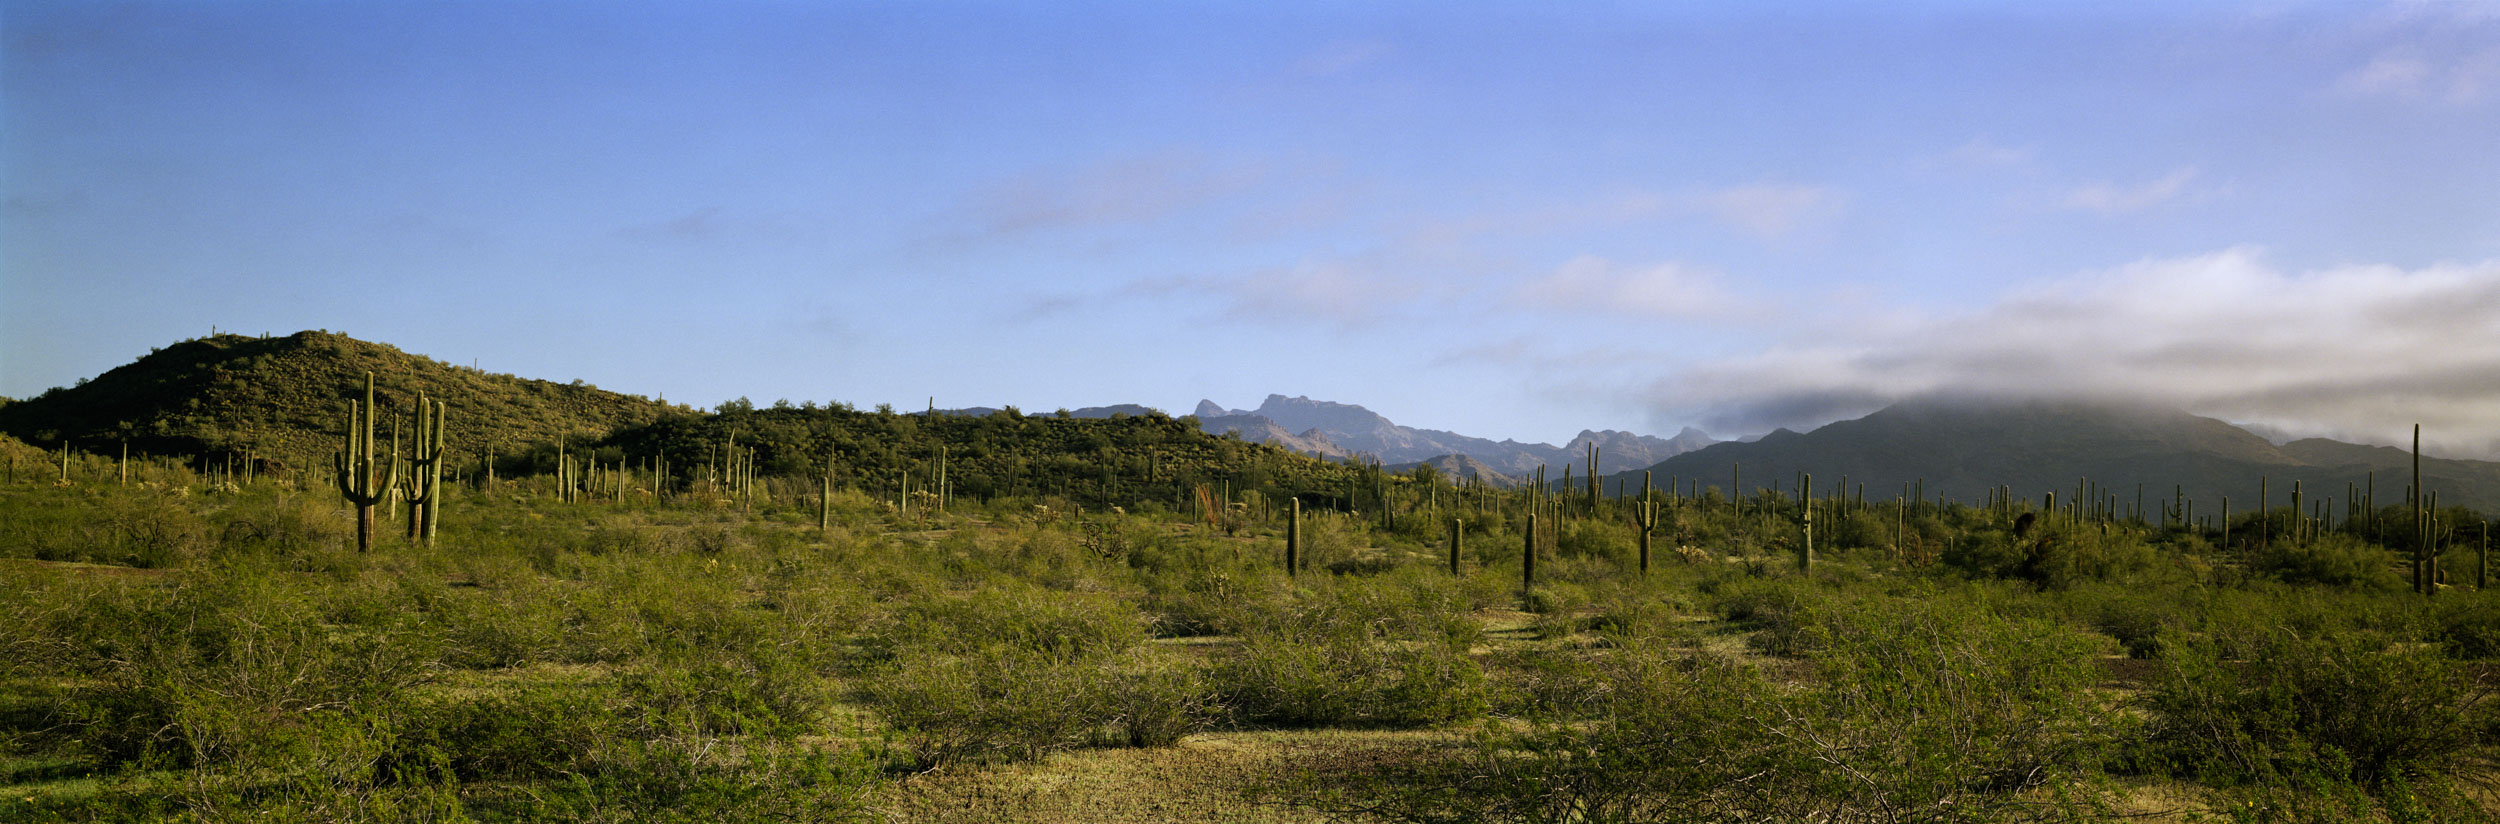 Saguaro National Park, Arizona.